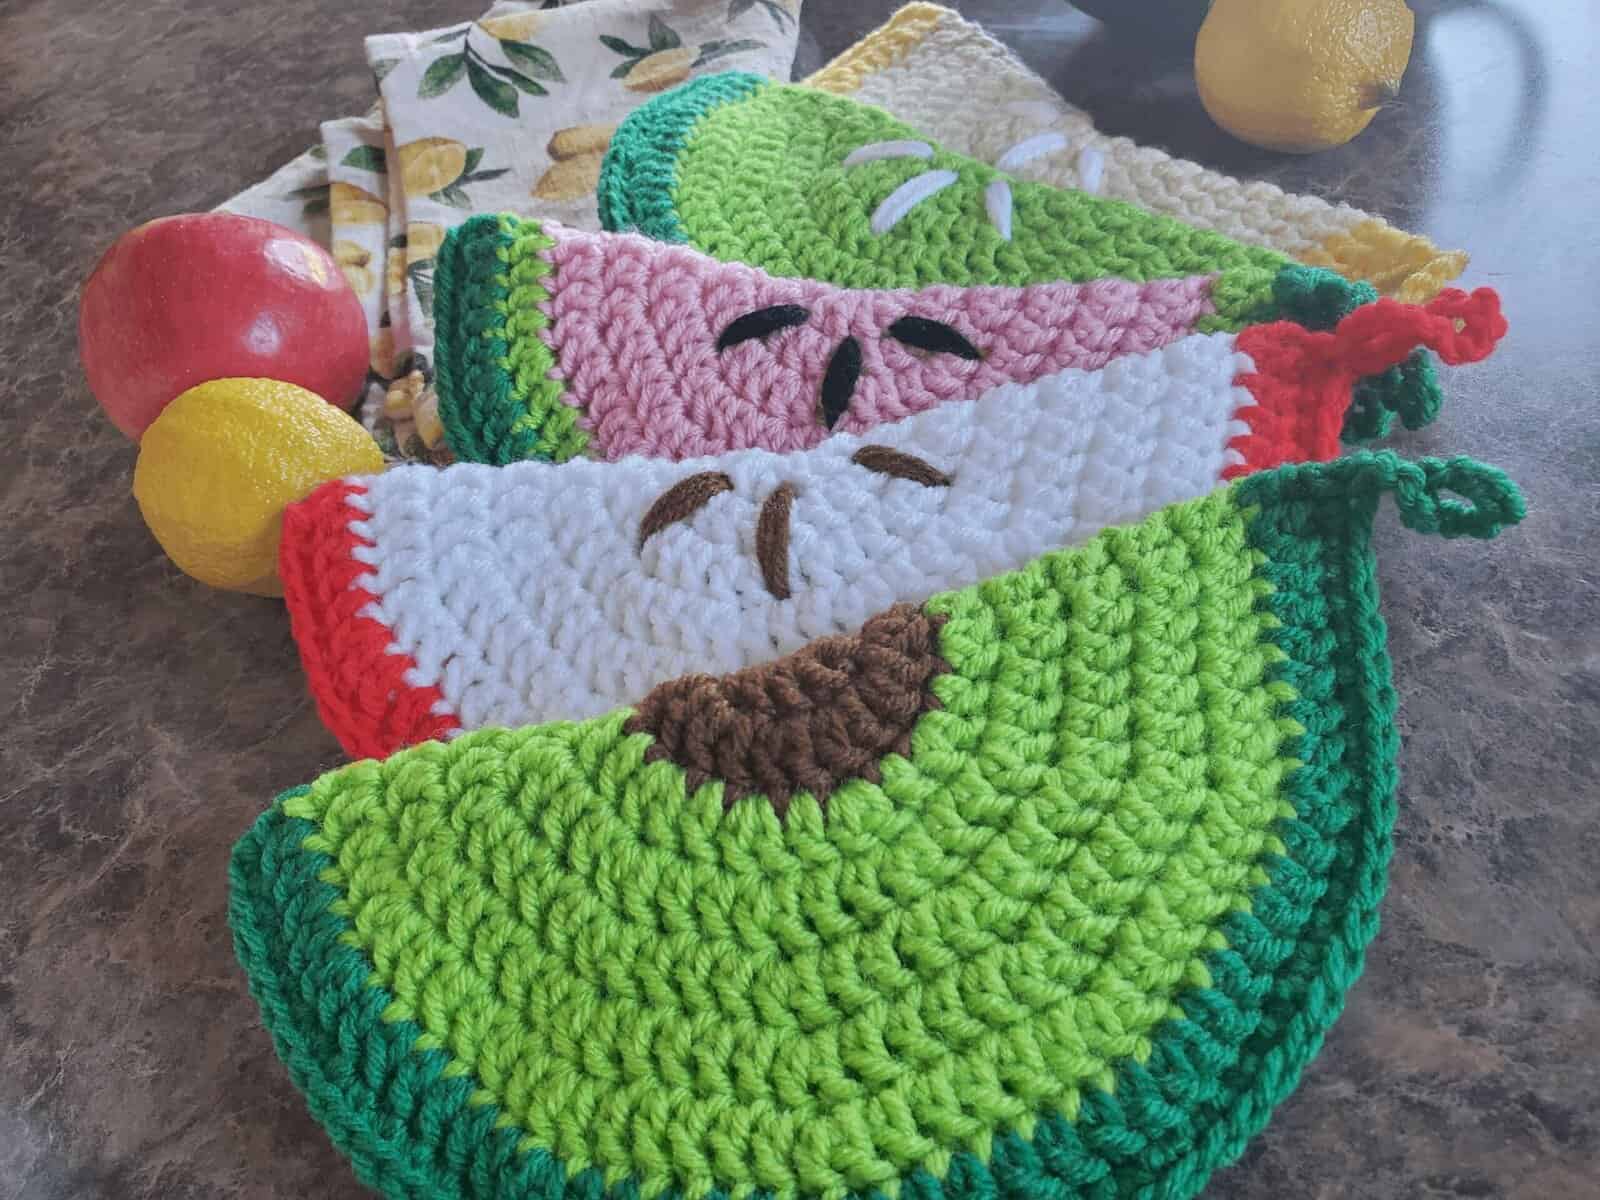 avocado, lemon, lime, red apple, and watermelon potholders crochet